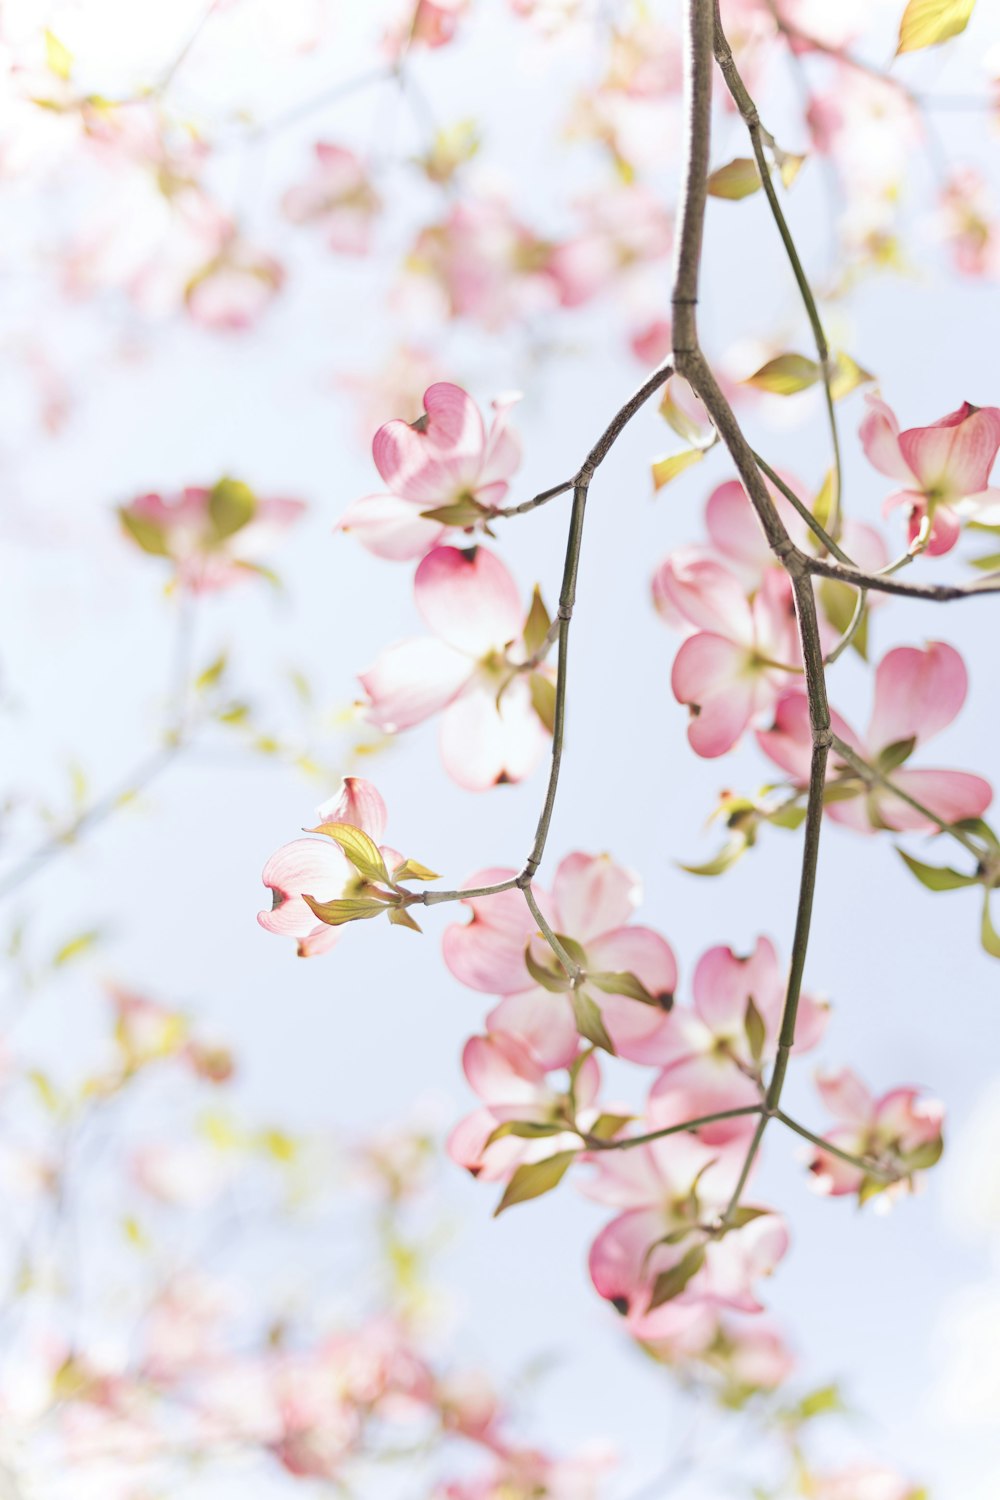 50,000+ Light Flower Pictures  Download Free Images on Unsplash